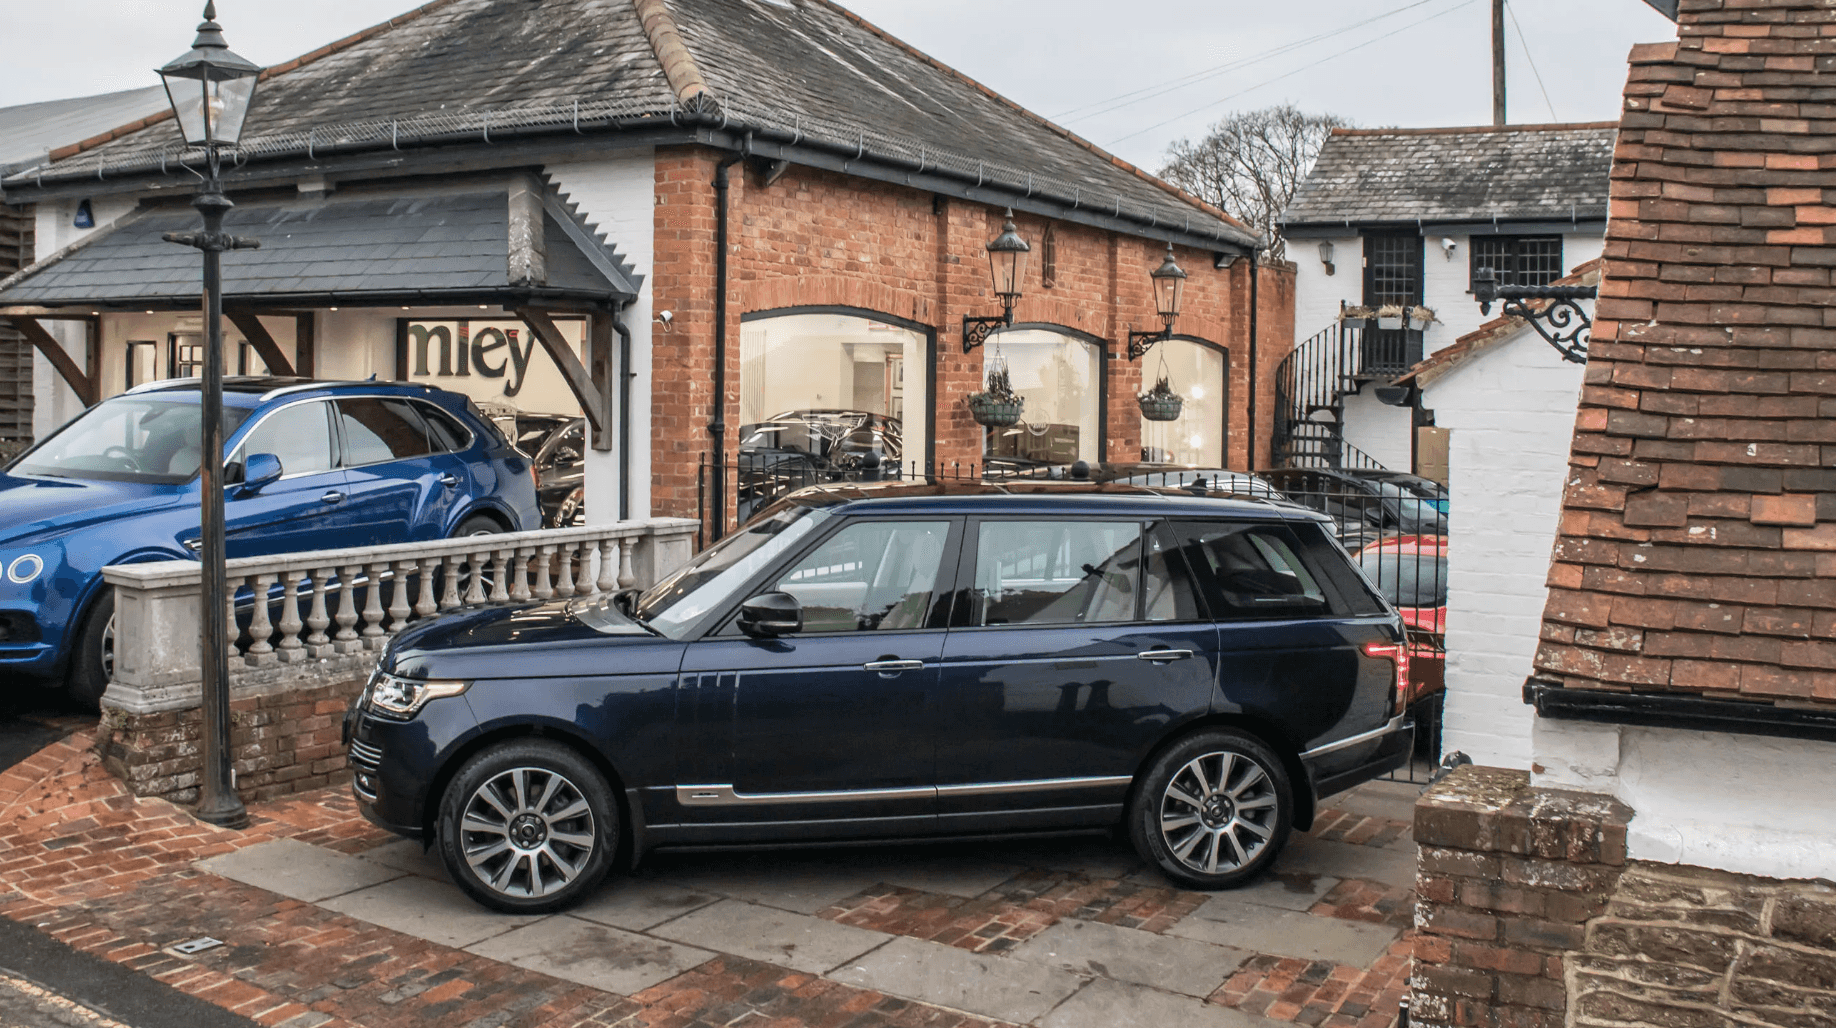 Queen Elizabeth II’s car, the Range Rover SDV8 Autobiography LWB 4.4 Litre